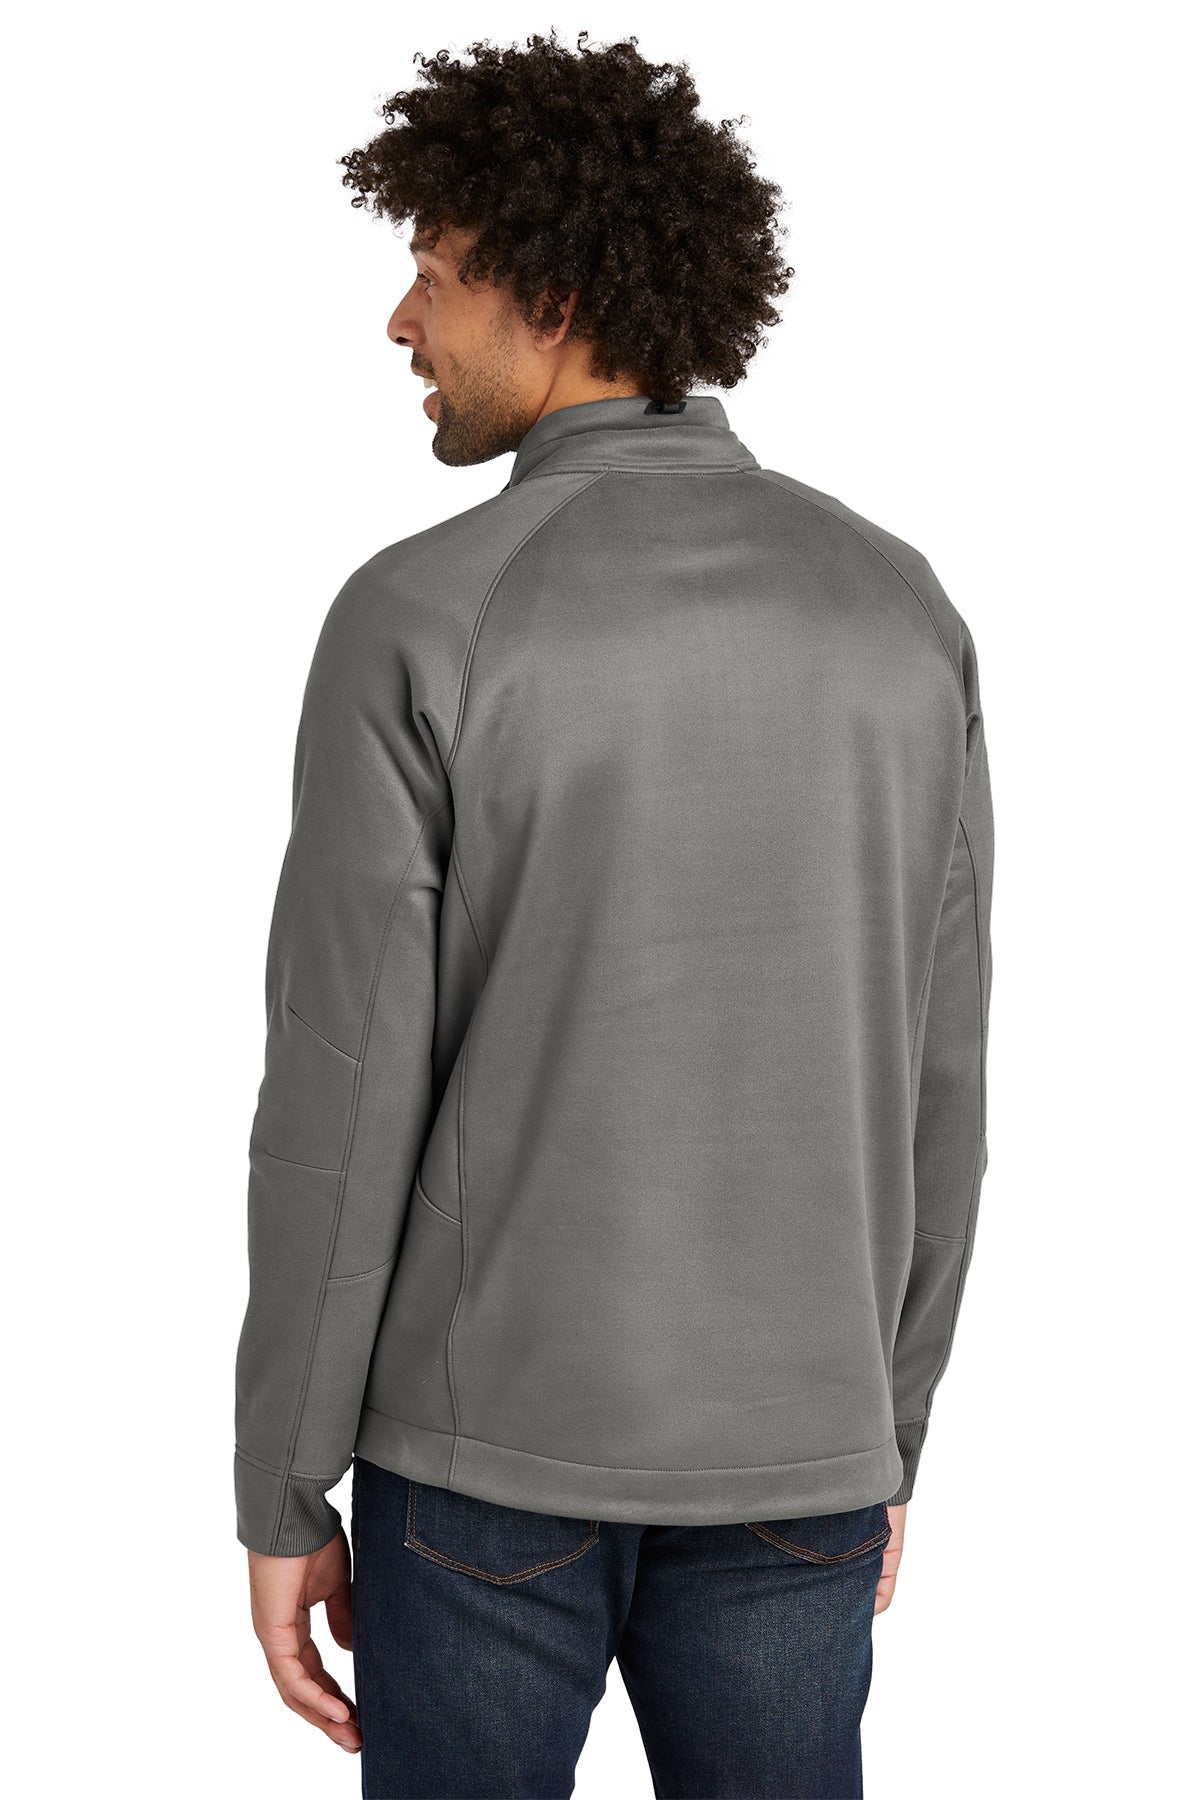 New Era Venue Fleece Custom Quarter Zips, Shadow Grey